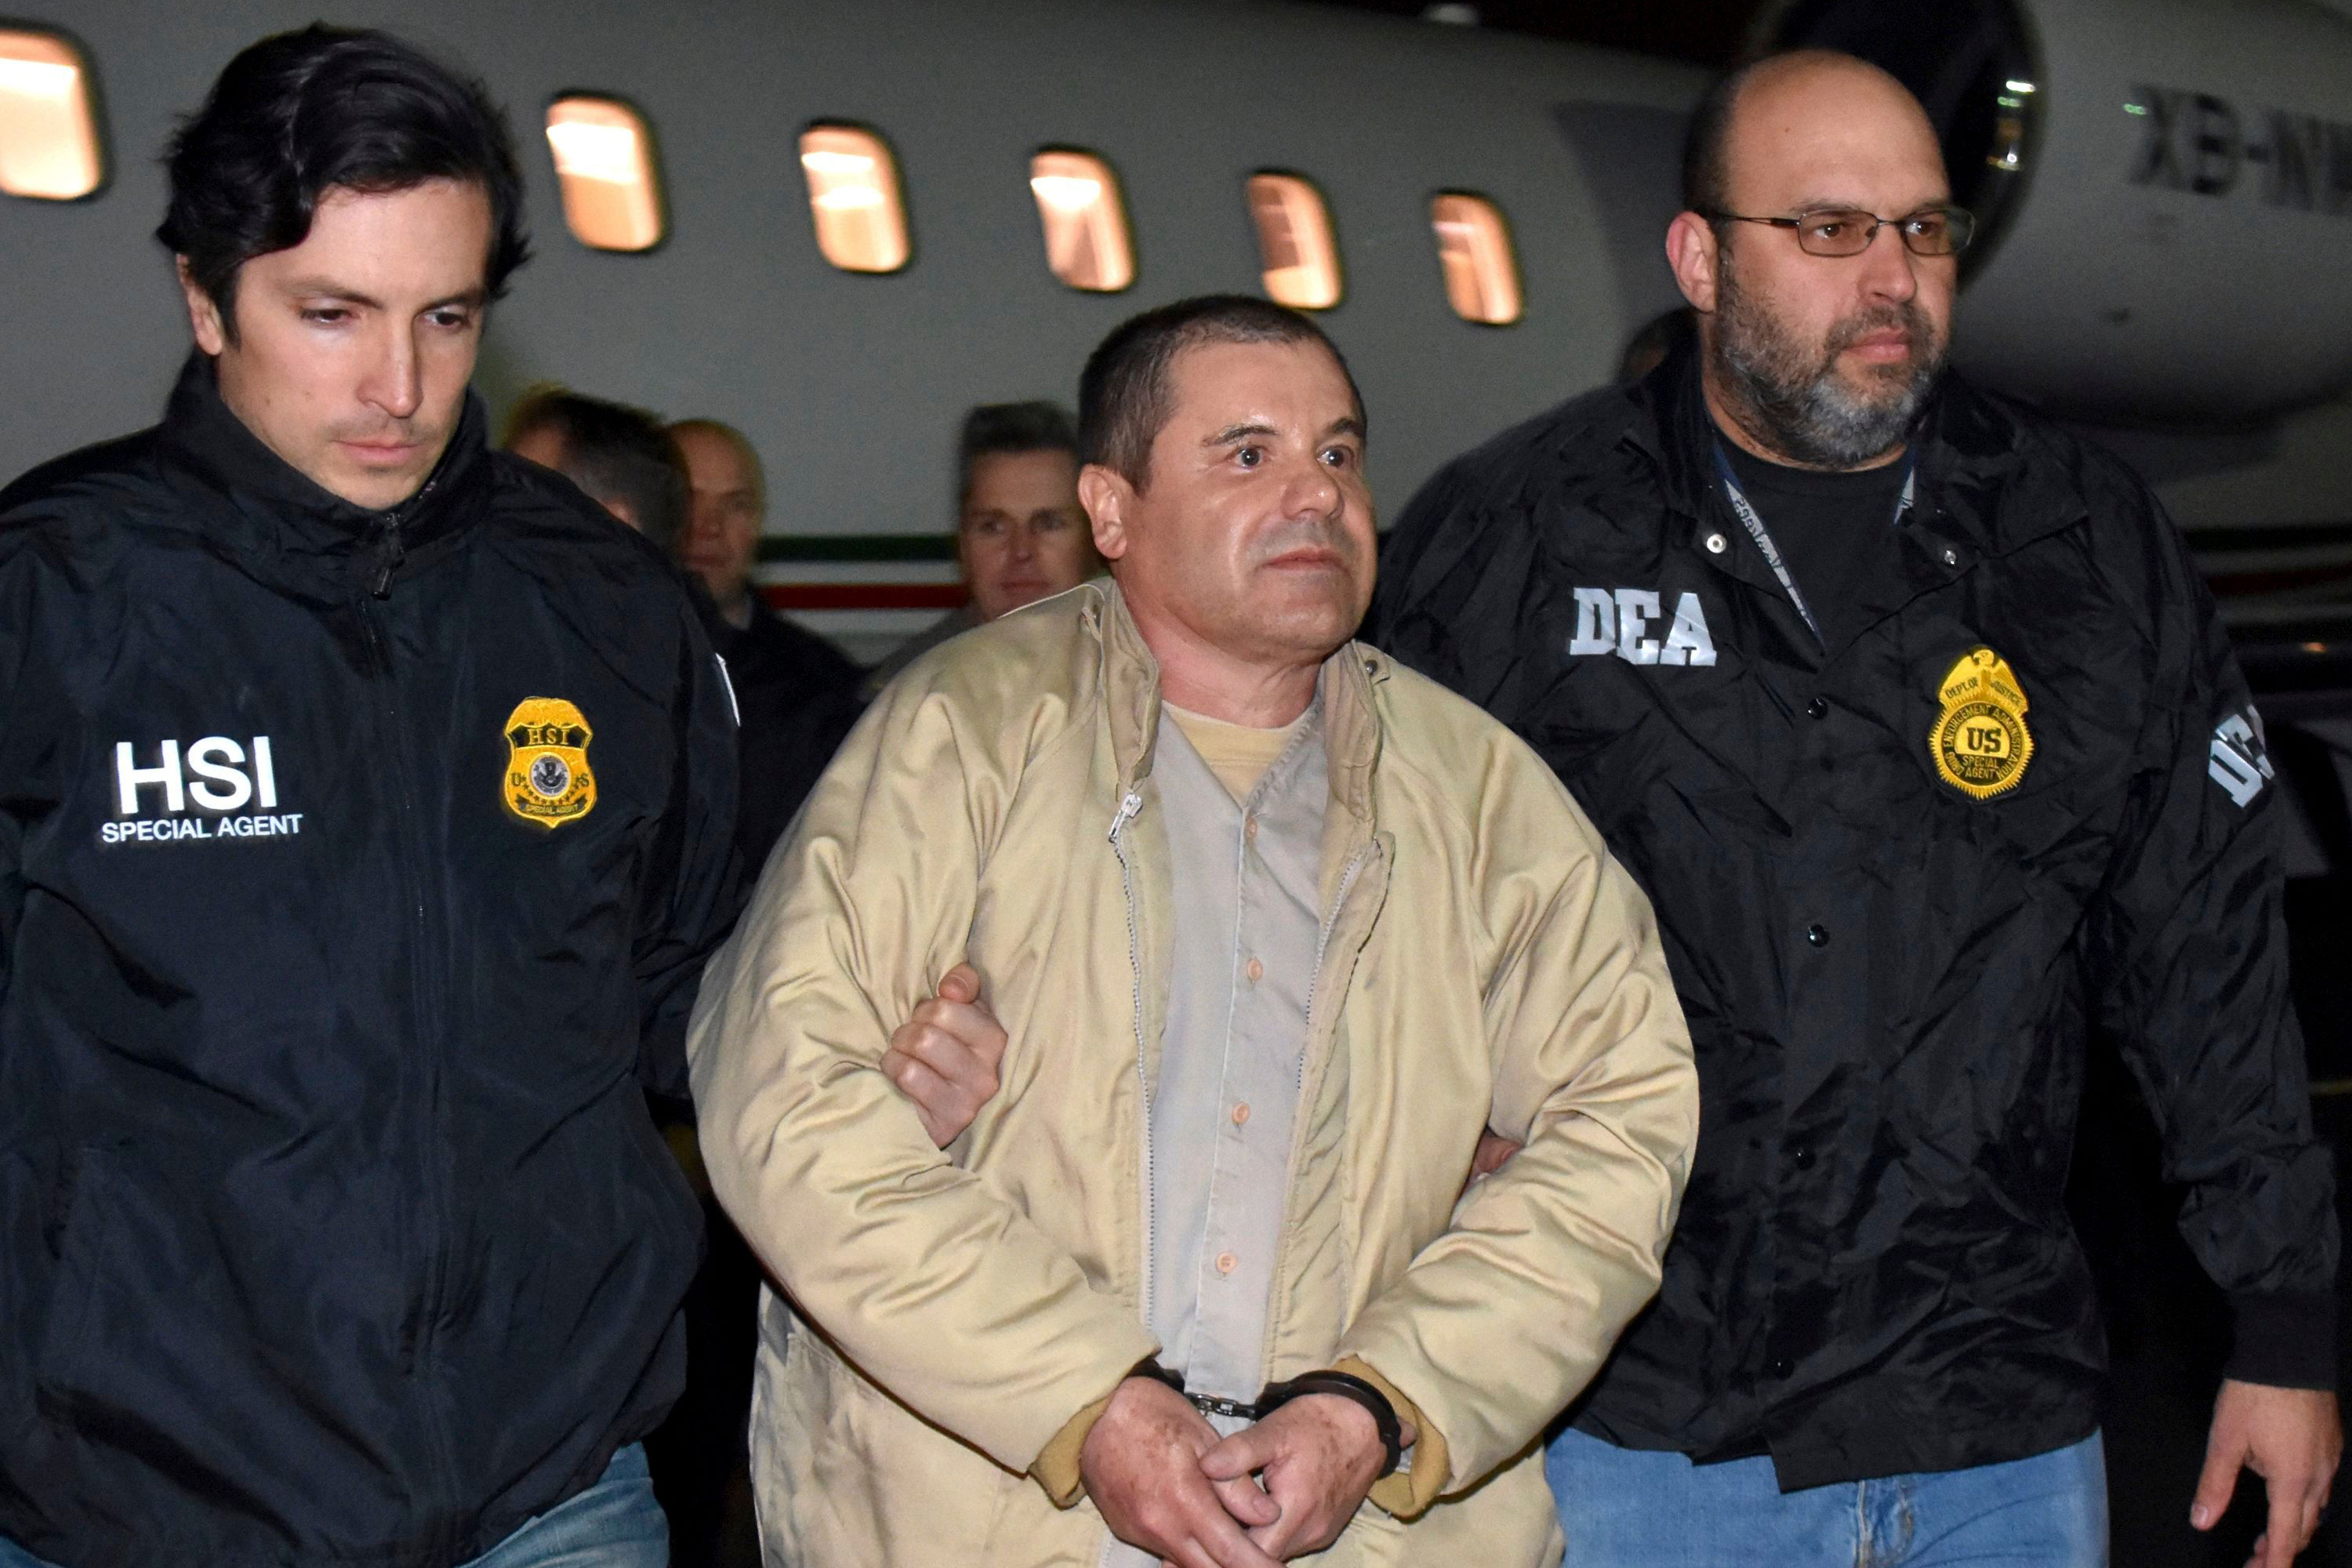 El Chapo under arrest